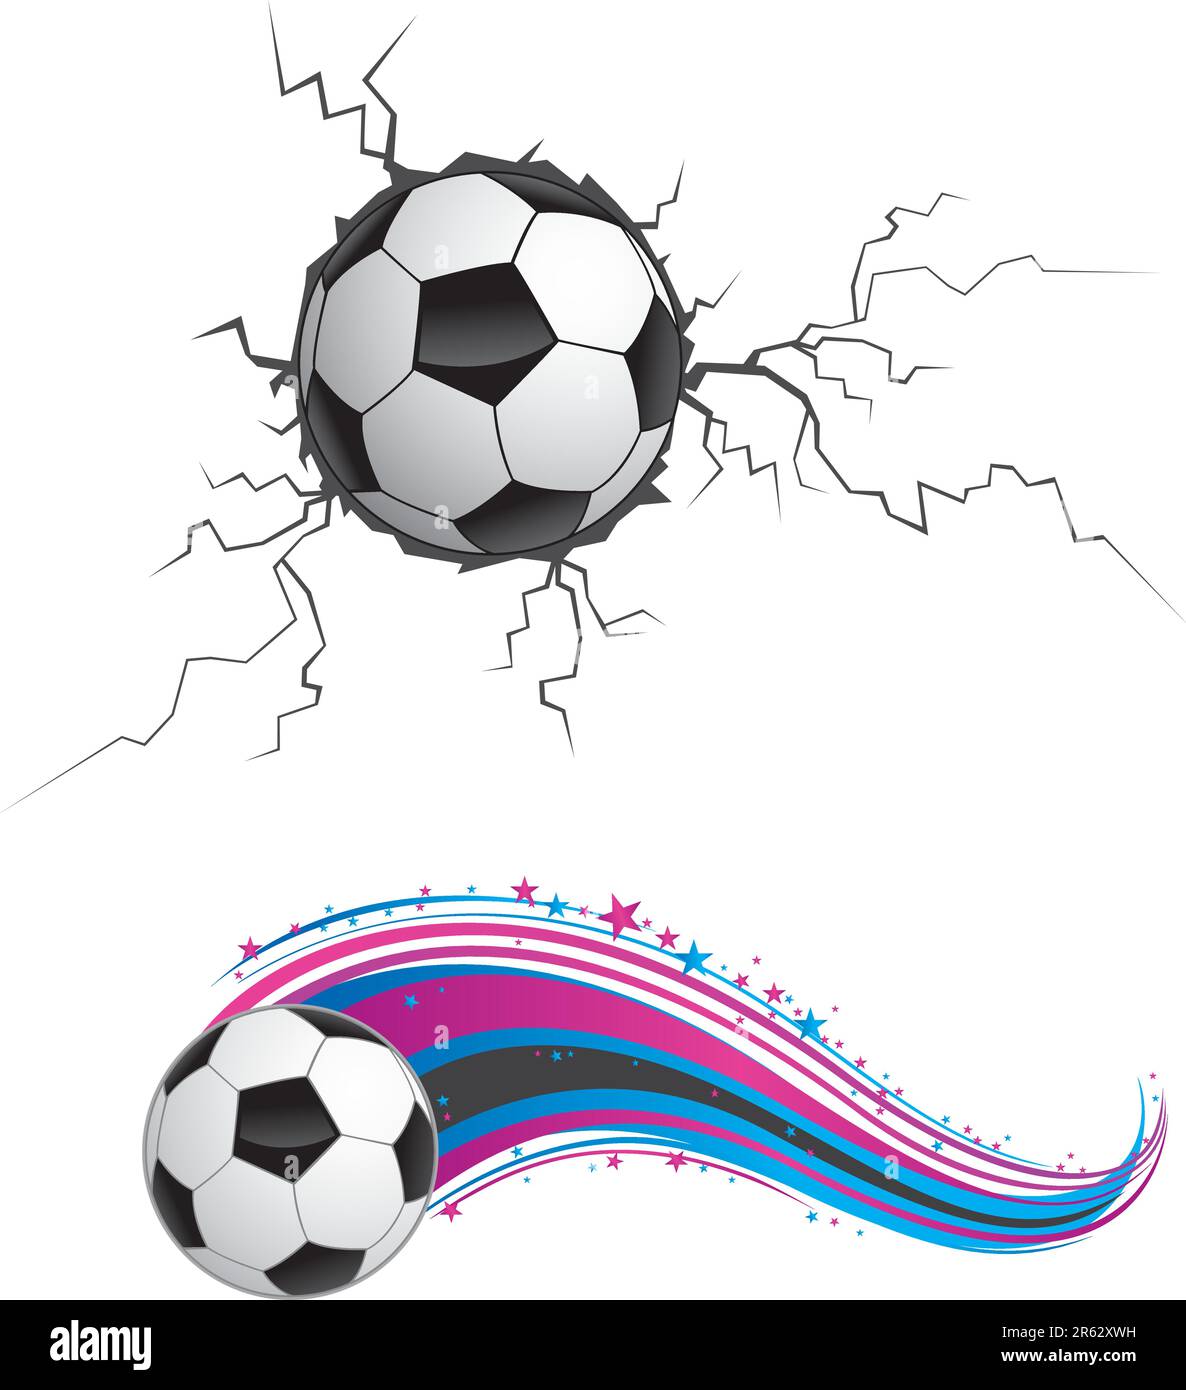 The cartoon soccer icon background Stock Vector